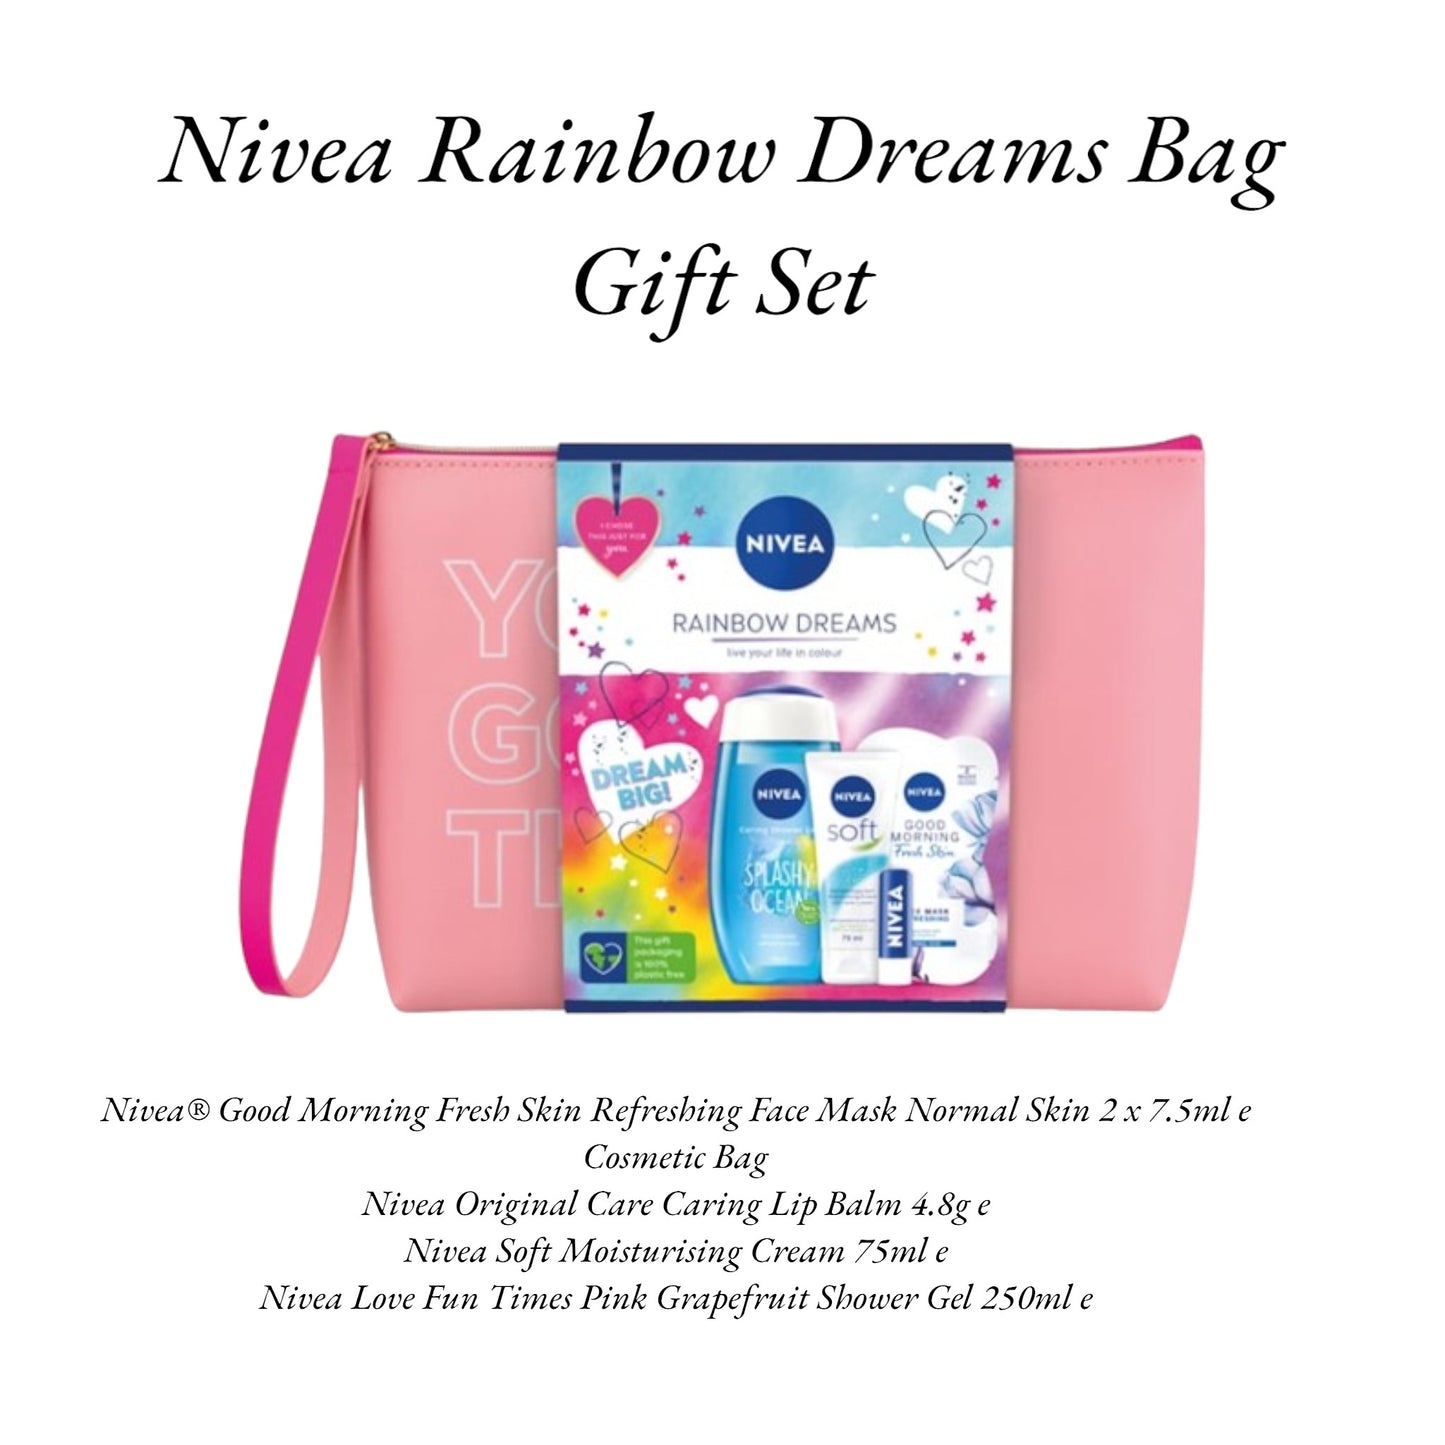 Nivea Rainbow Dreams Bag Gift Set